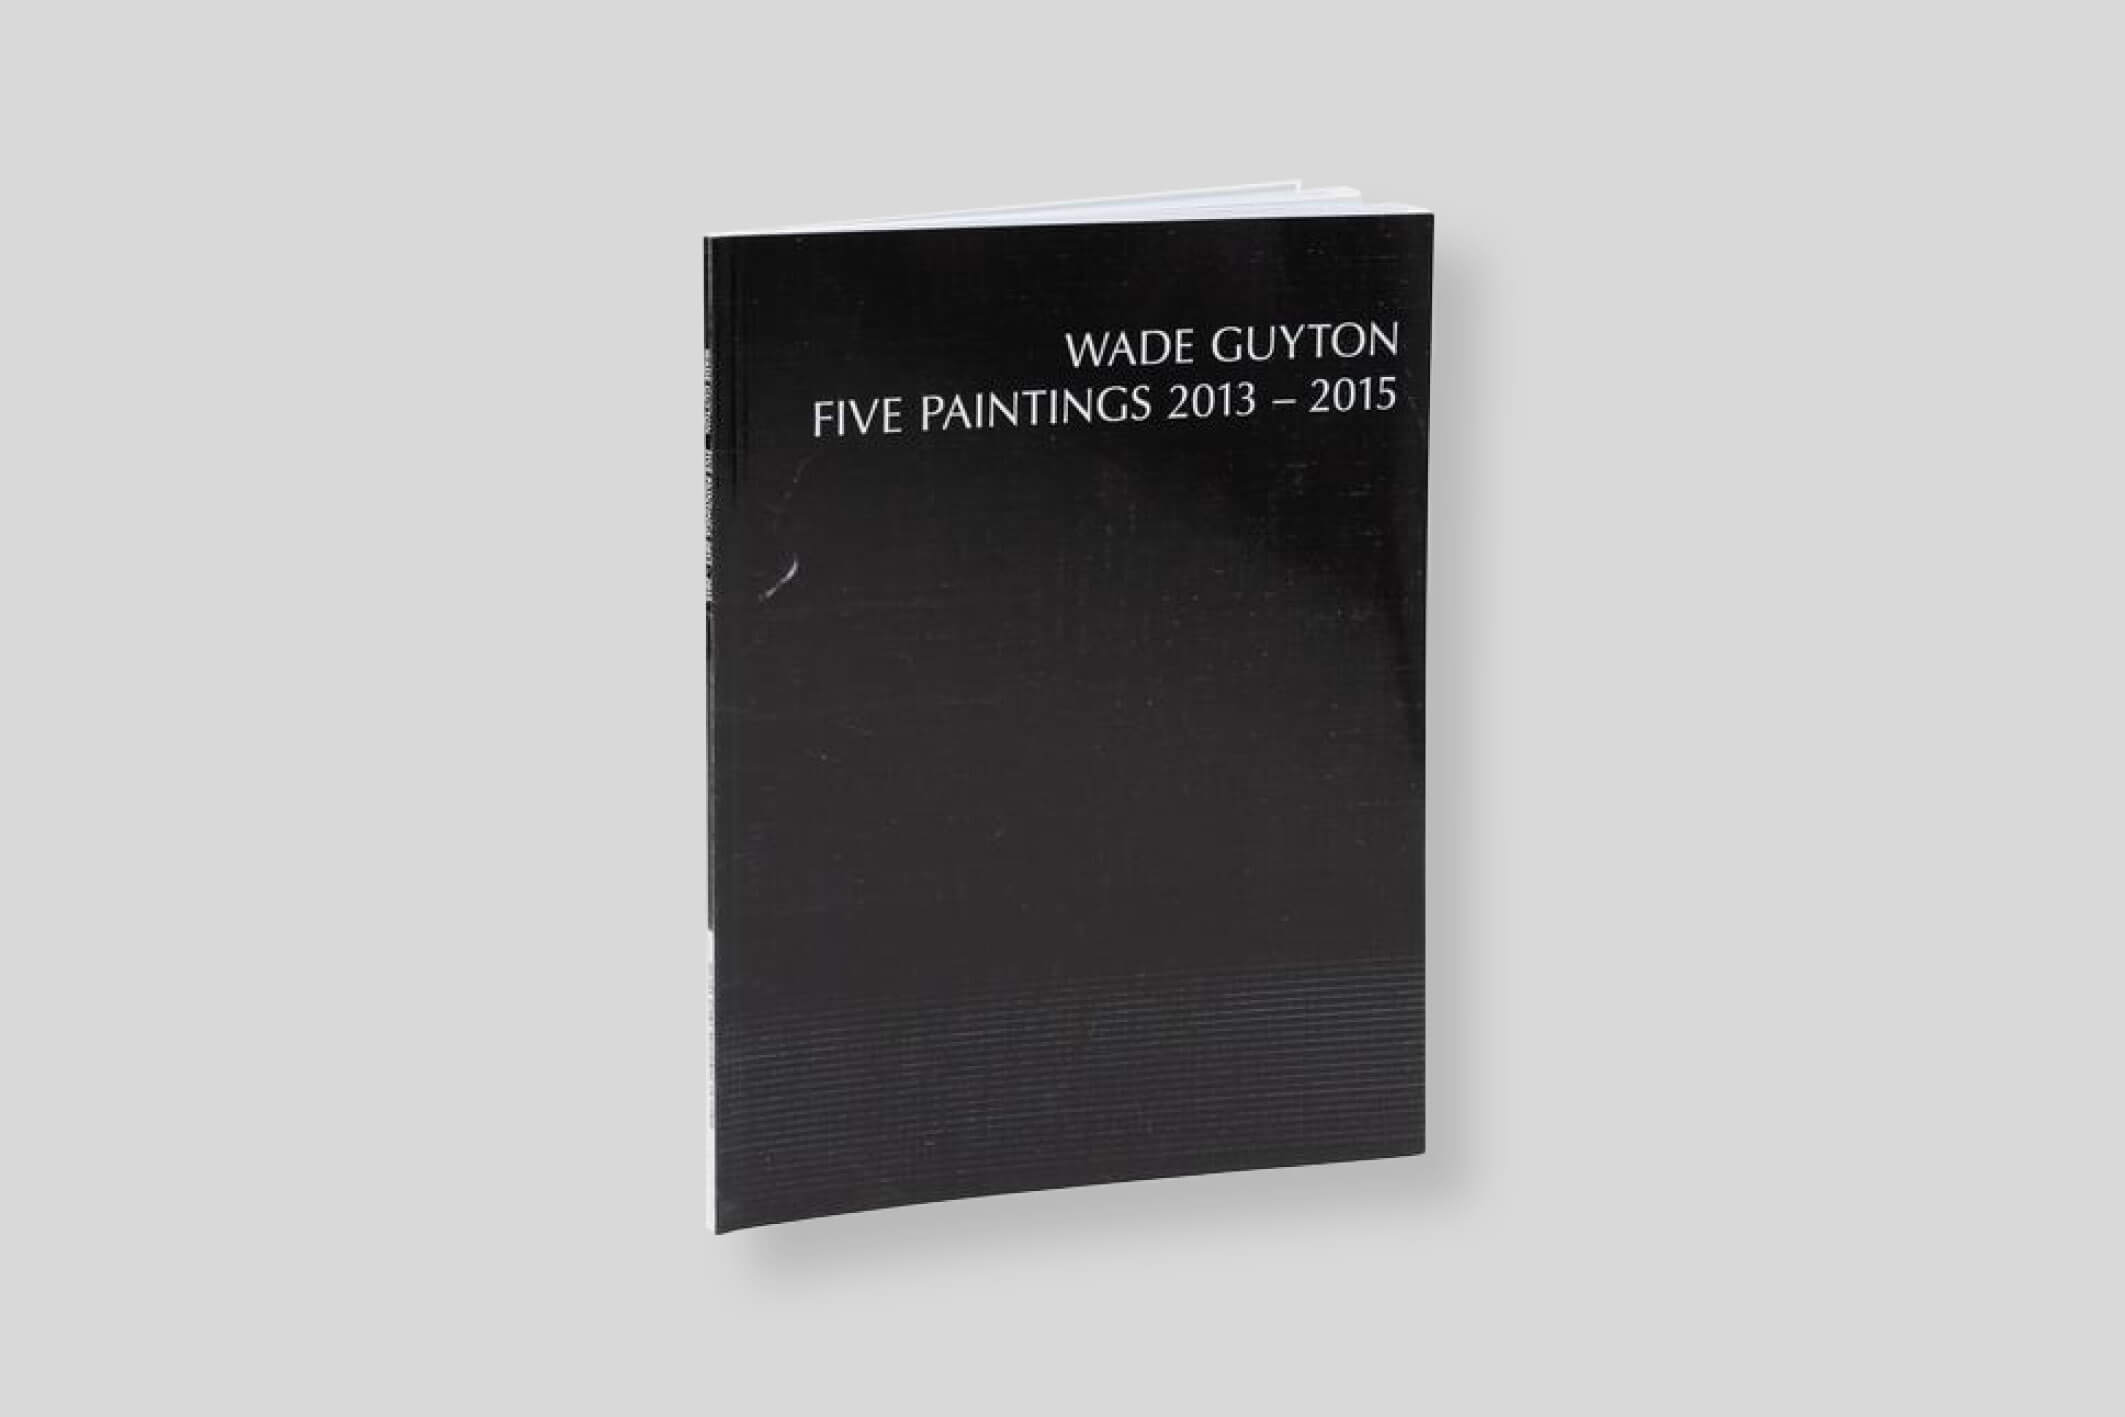 five-paintings-wade-guyton-2013-2015-chantal-crousel-cover